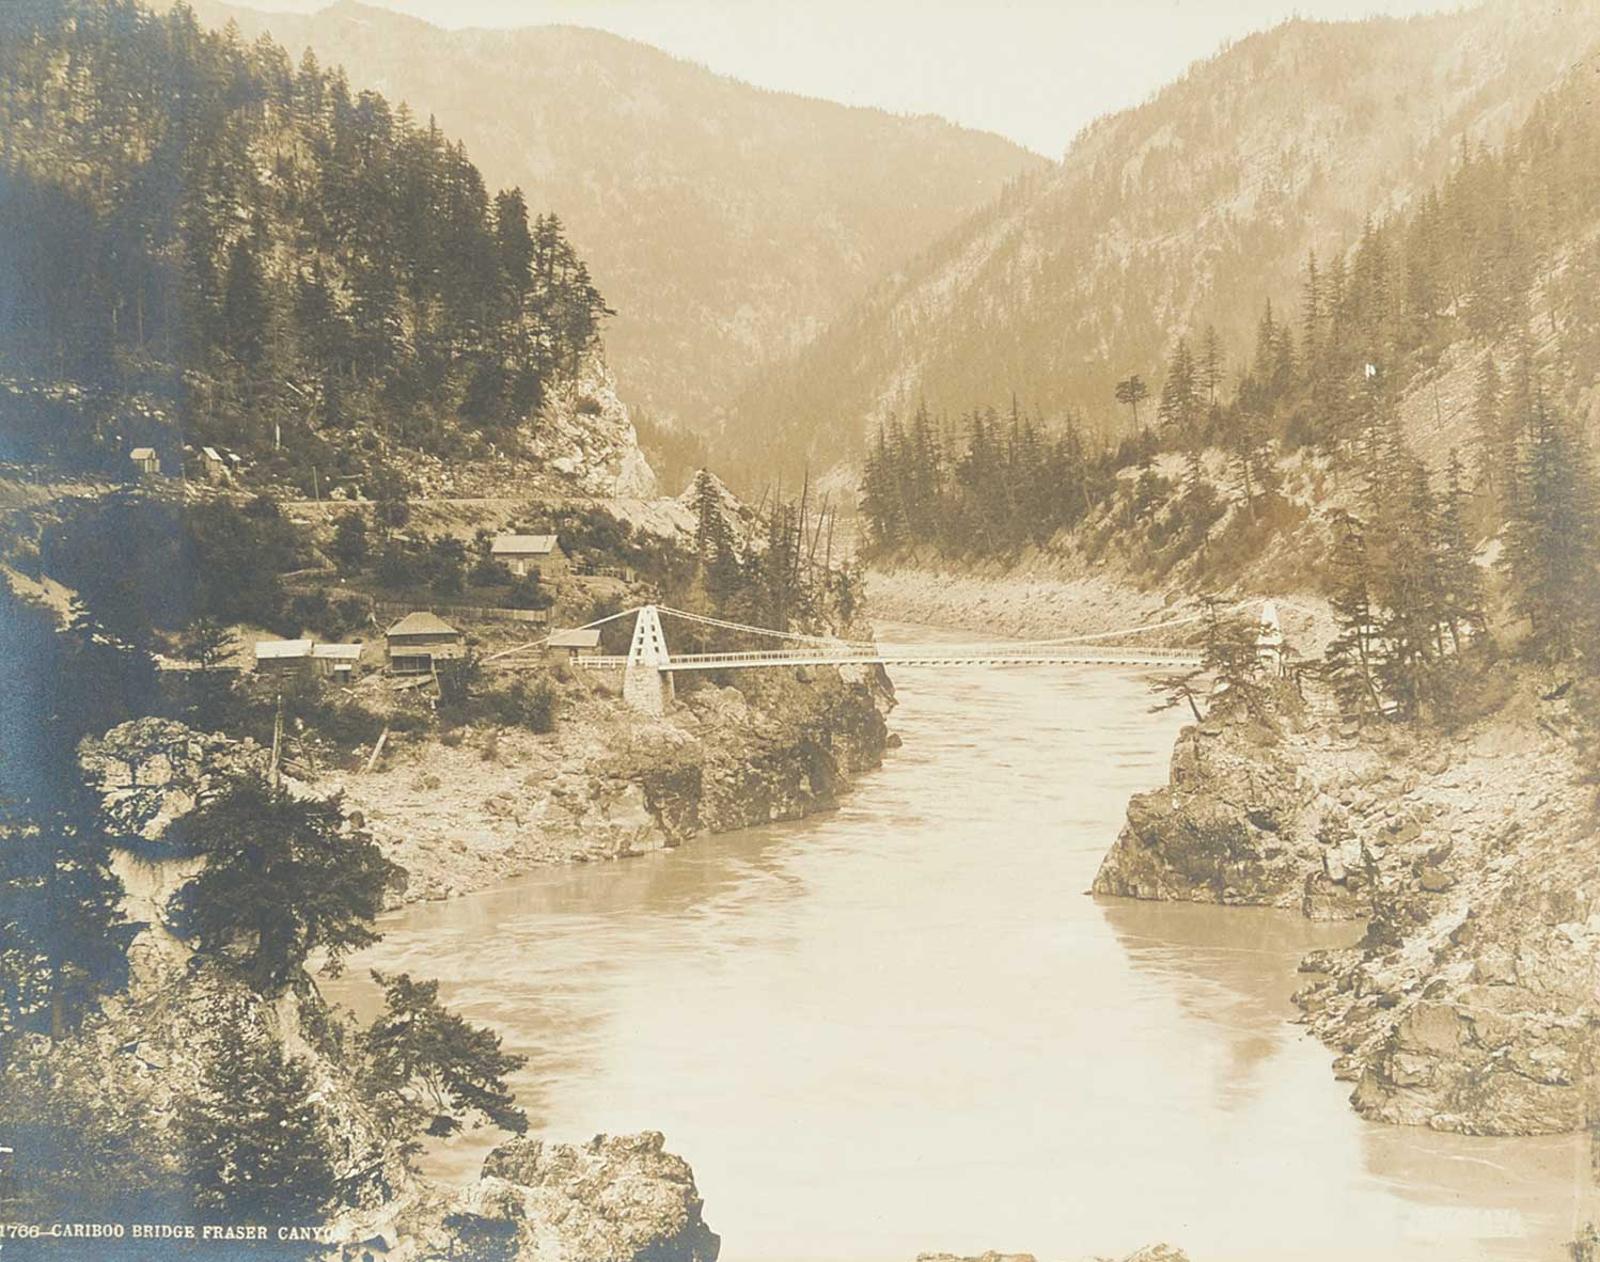 William Notman (1826-1891) - 1766 - Caribou Bridge, Fraser Canyon